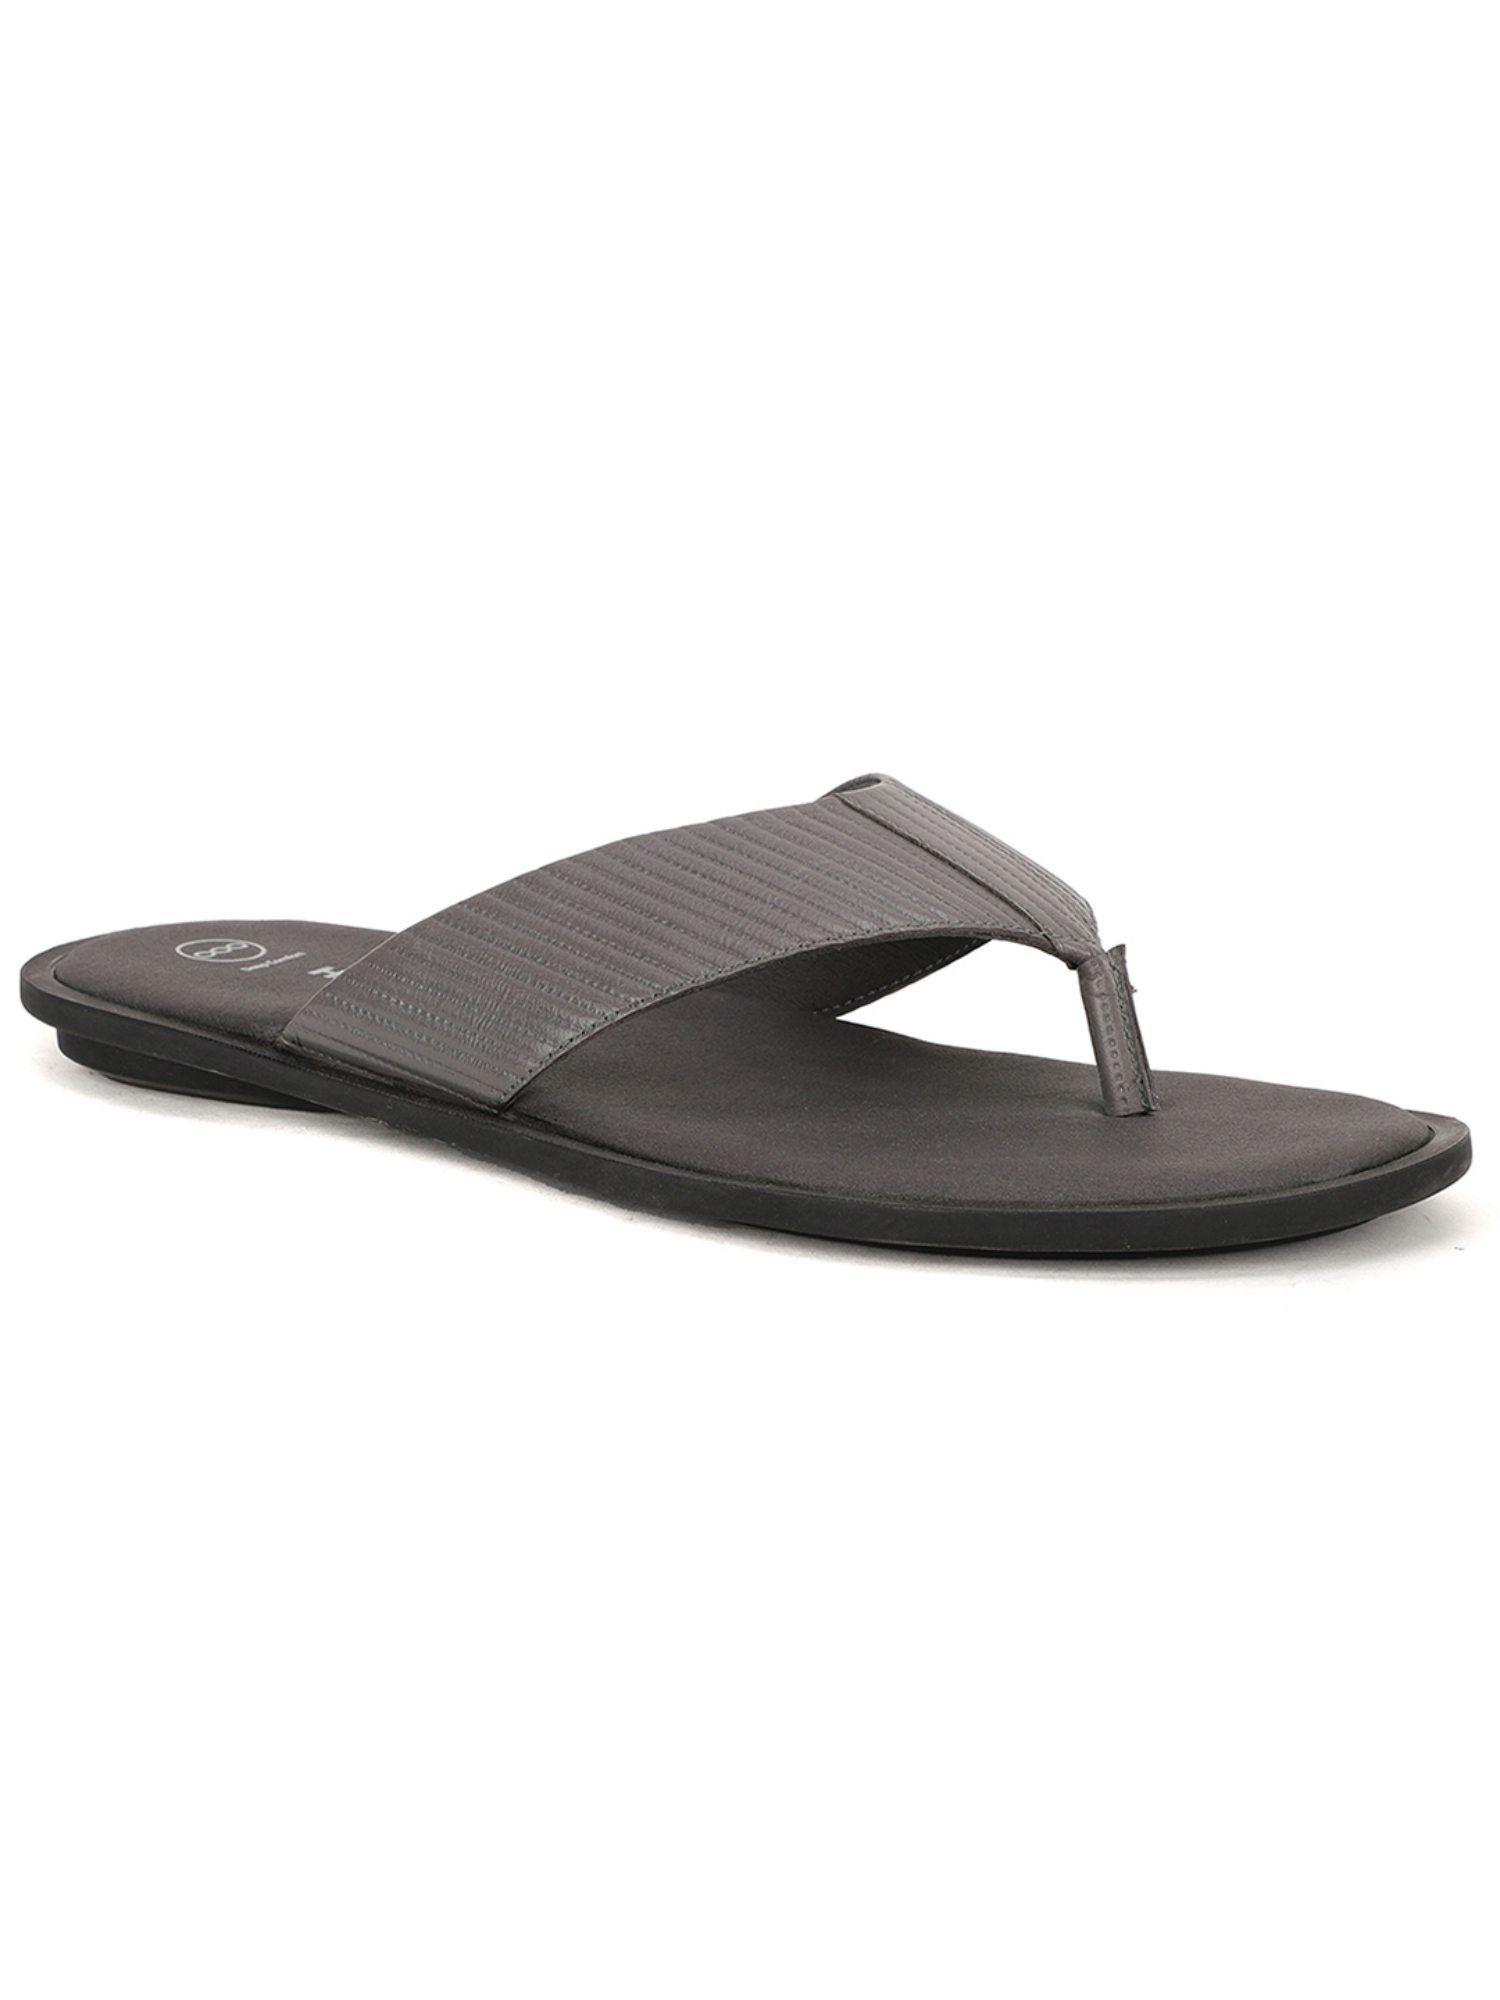 solid-grey-sandals